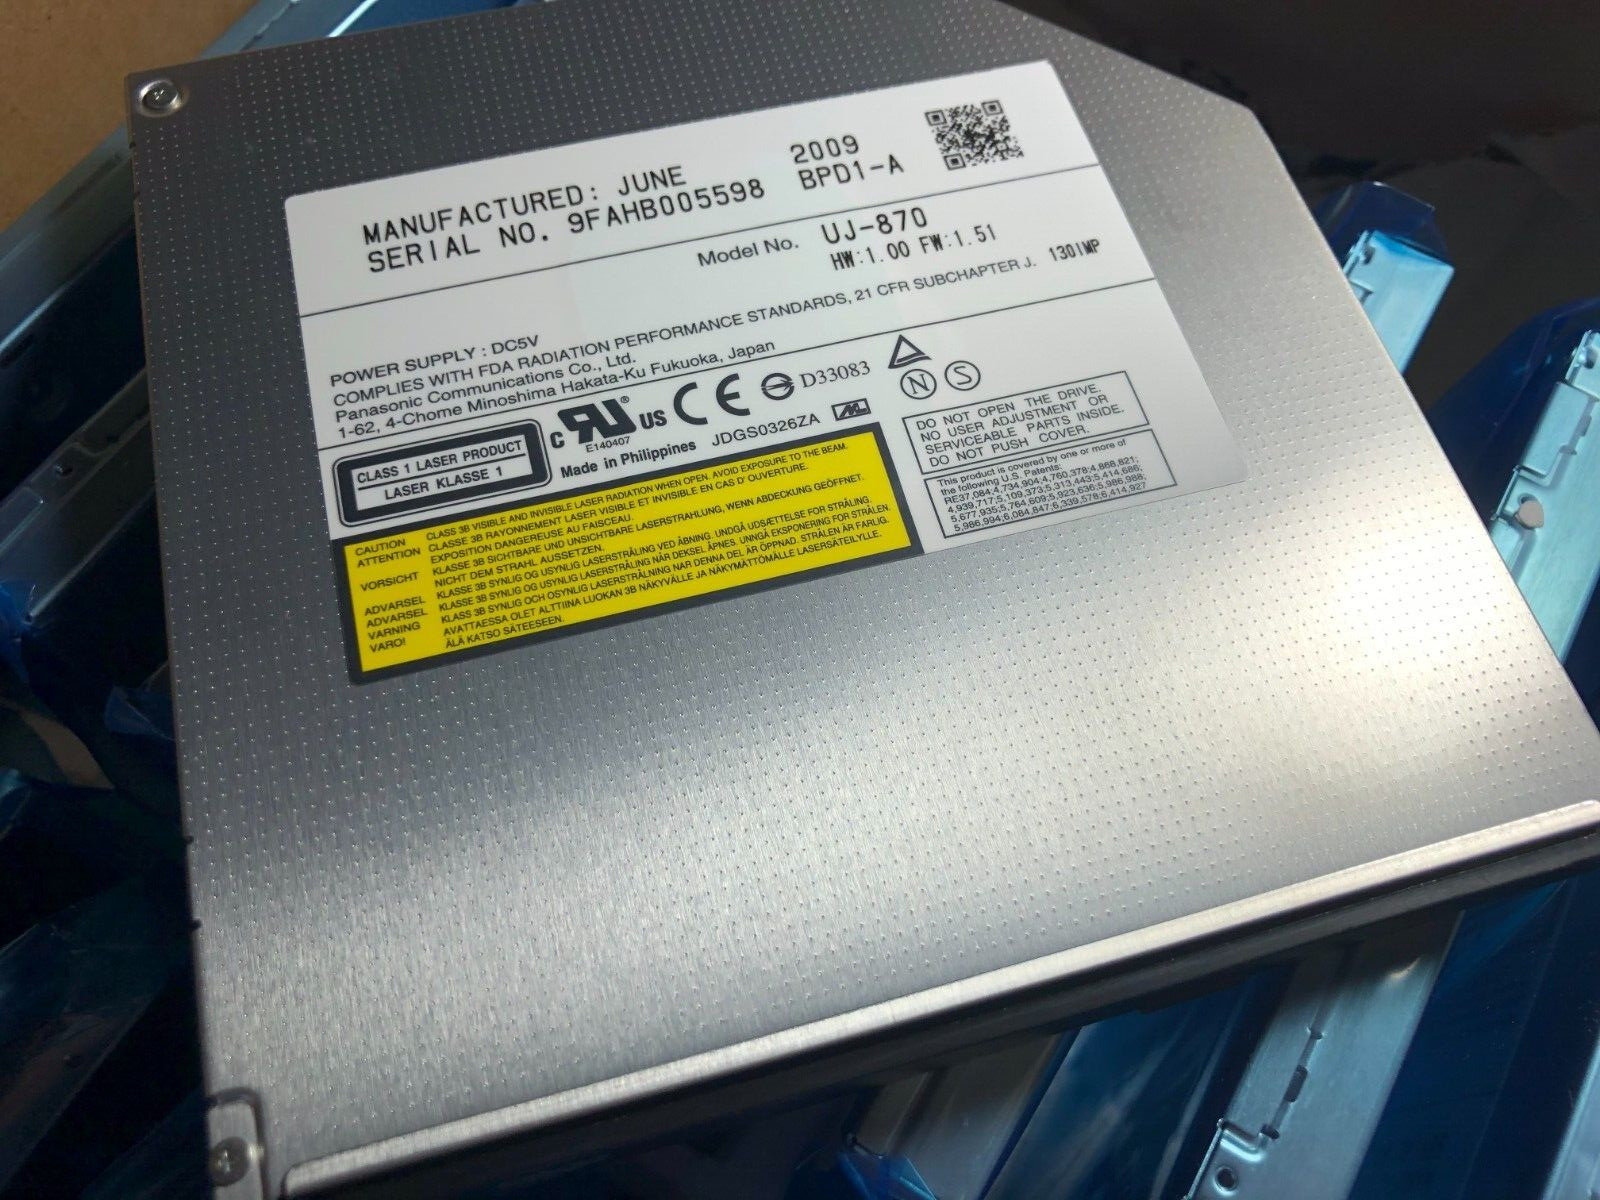 New Genuine Panasonic UJ-870 DVD IDE drive for PC/Laptop